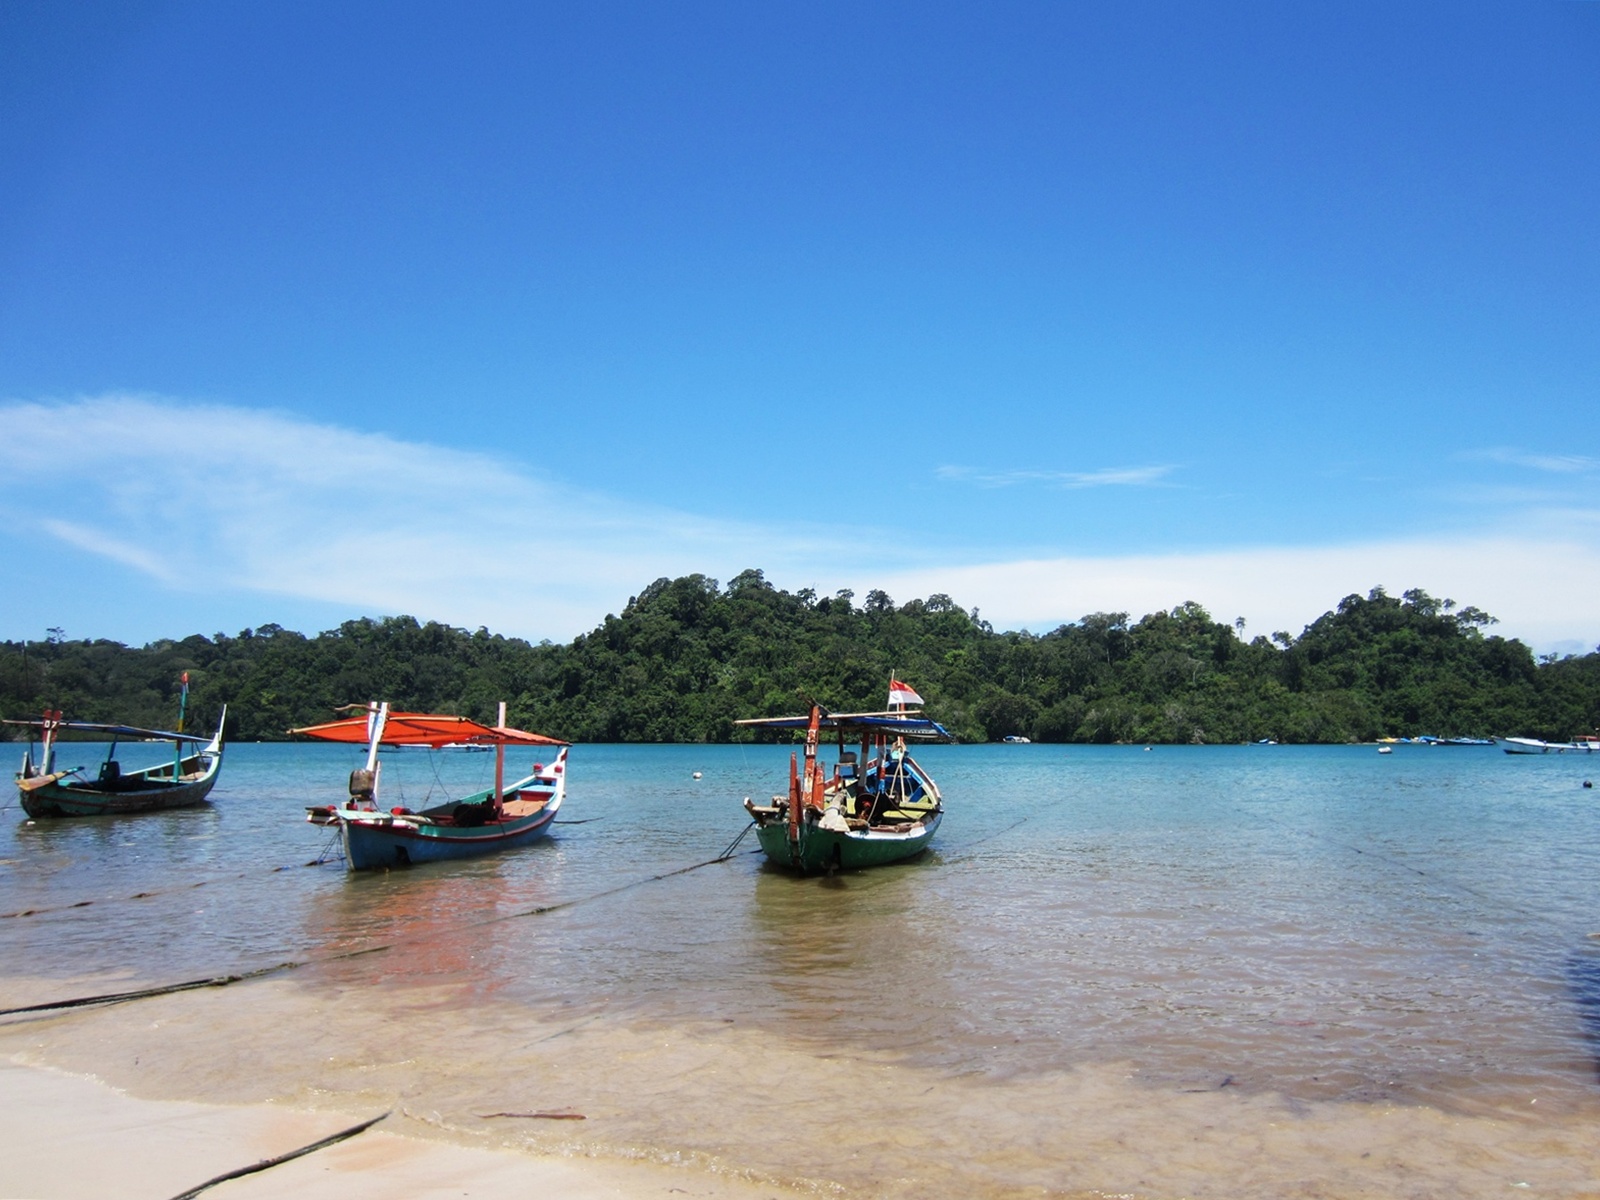 Tempat Wisata Pantai Sendang Biru Di Malang